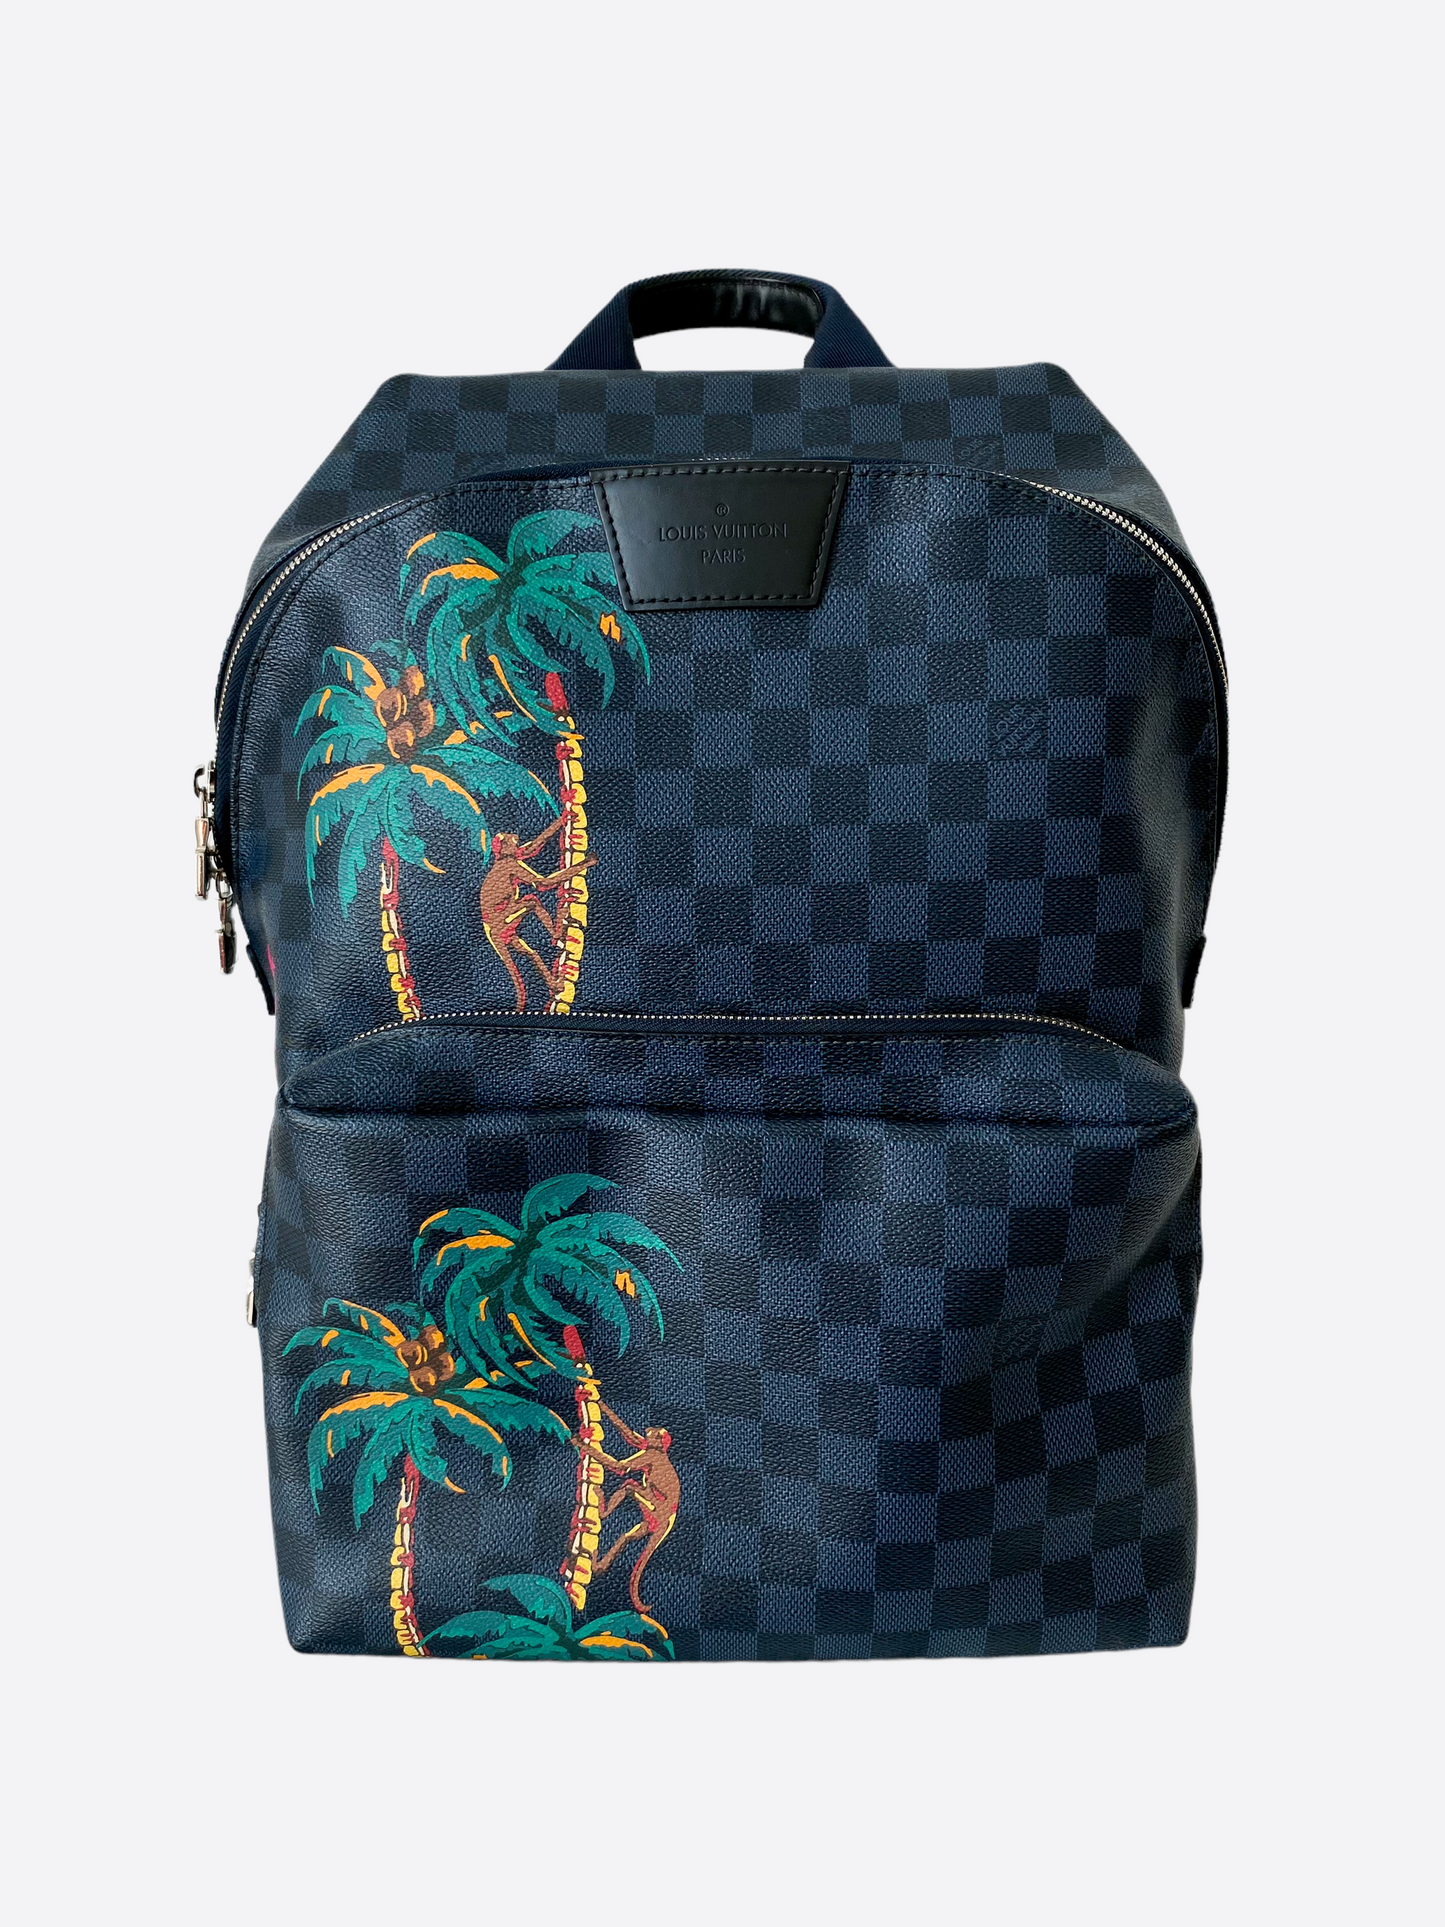 cheap louis vuitton backpack